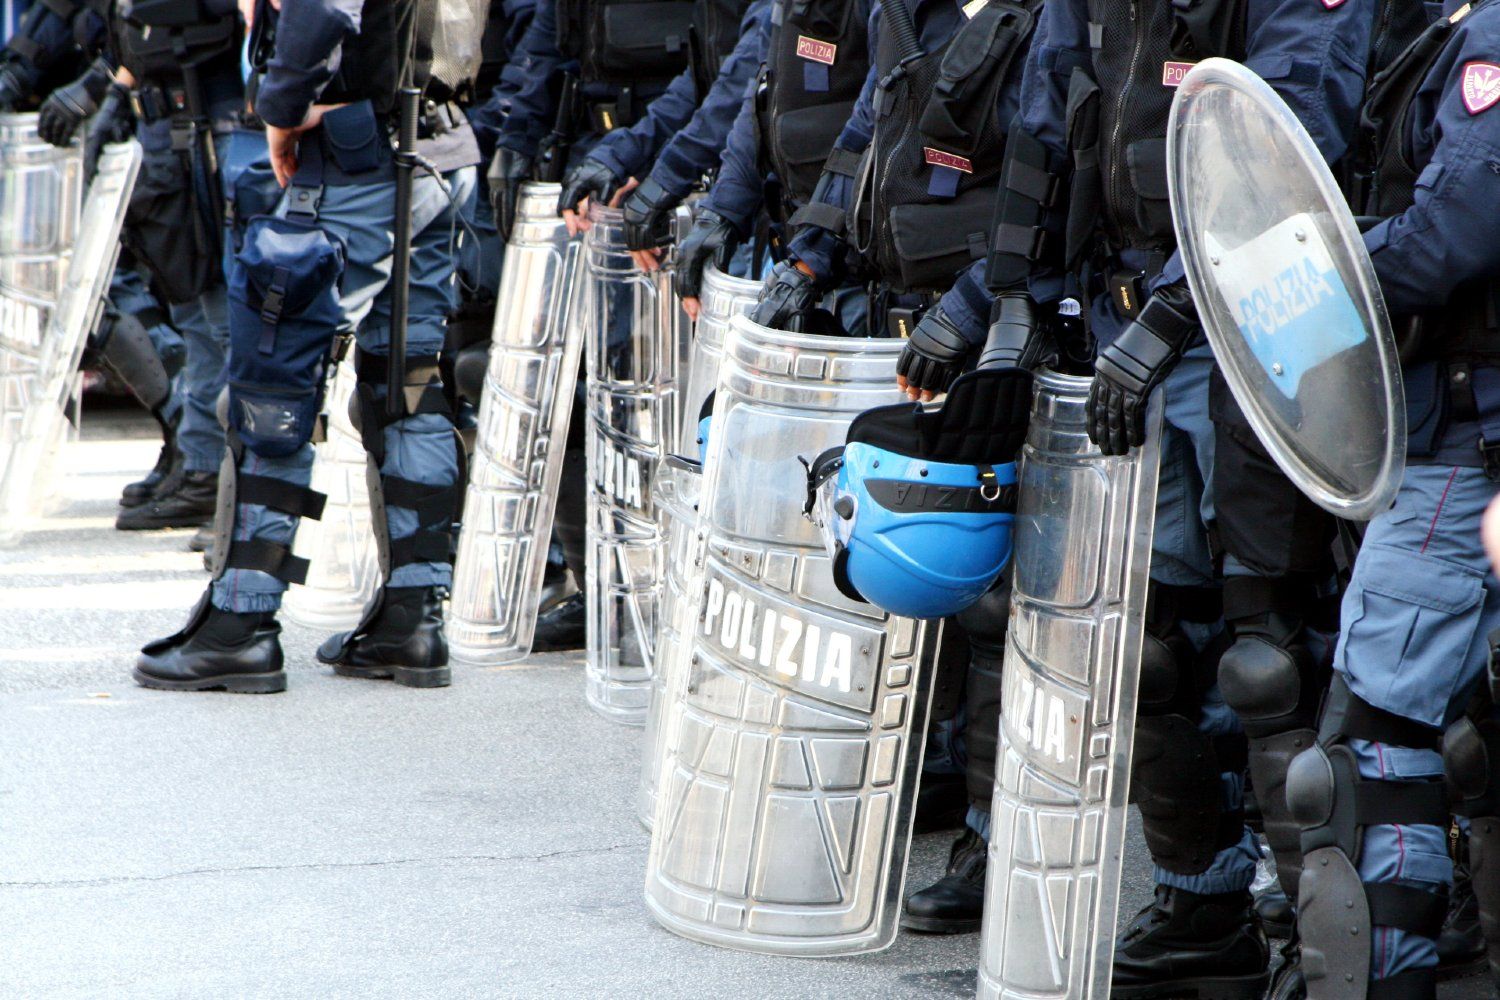 Police in riot gear